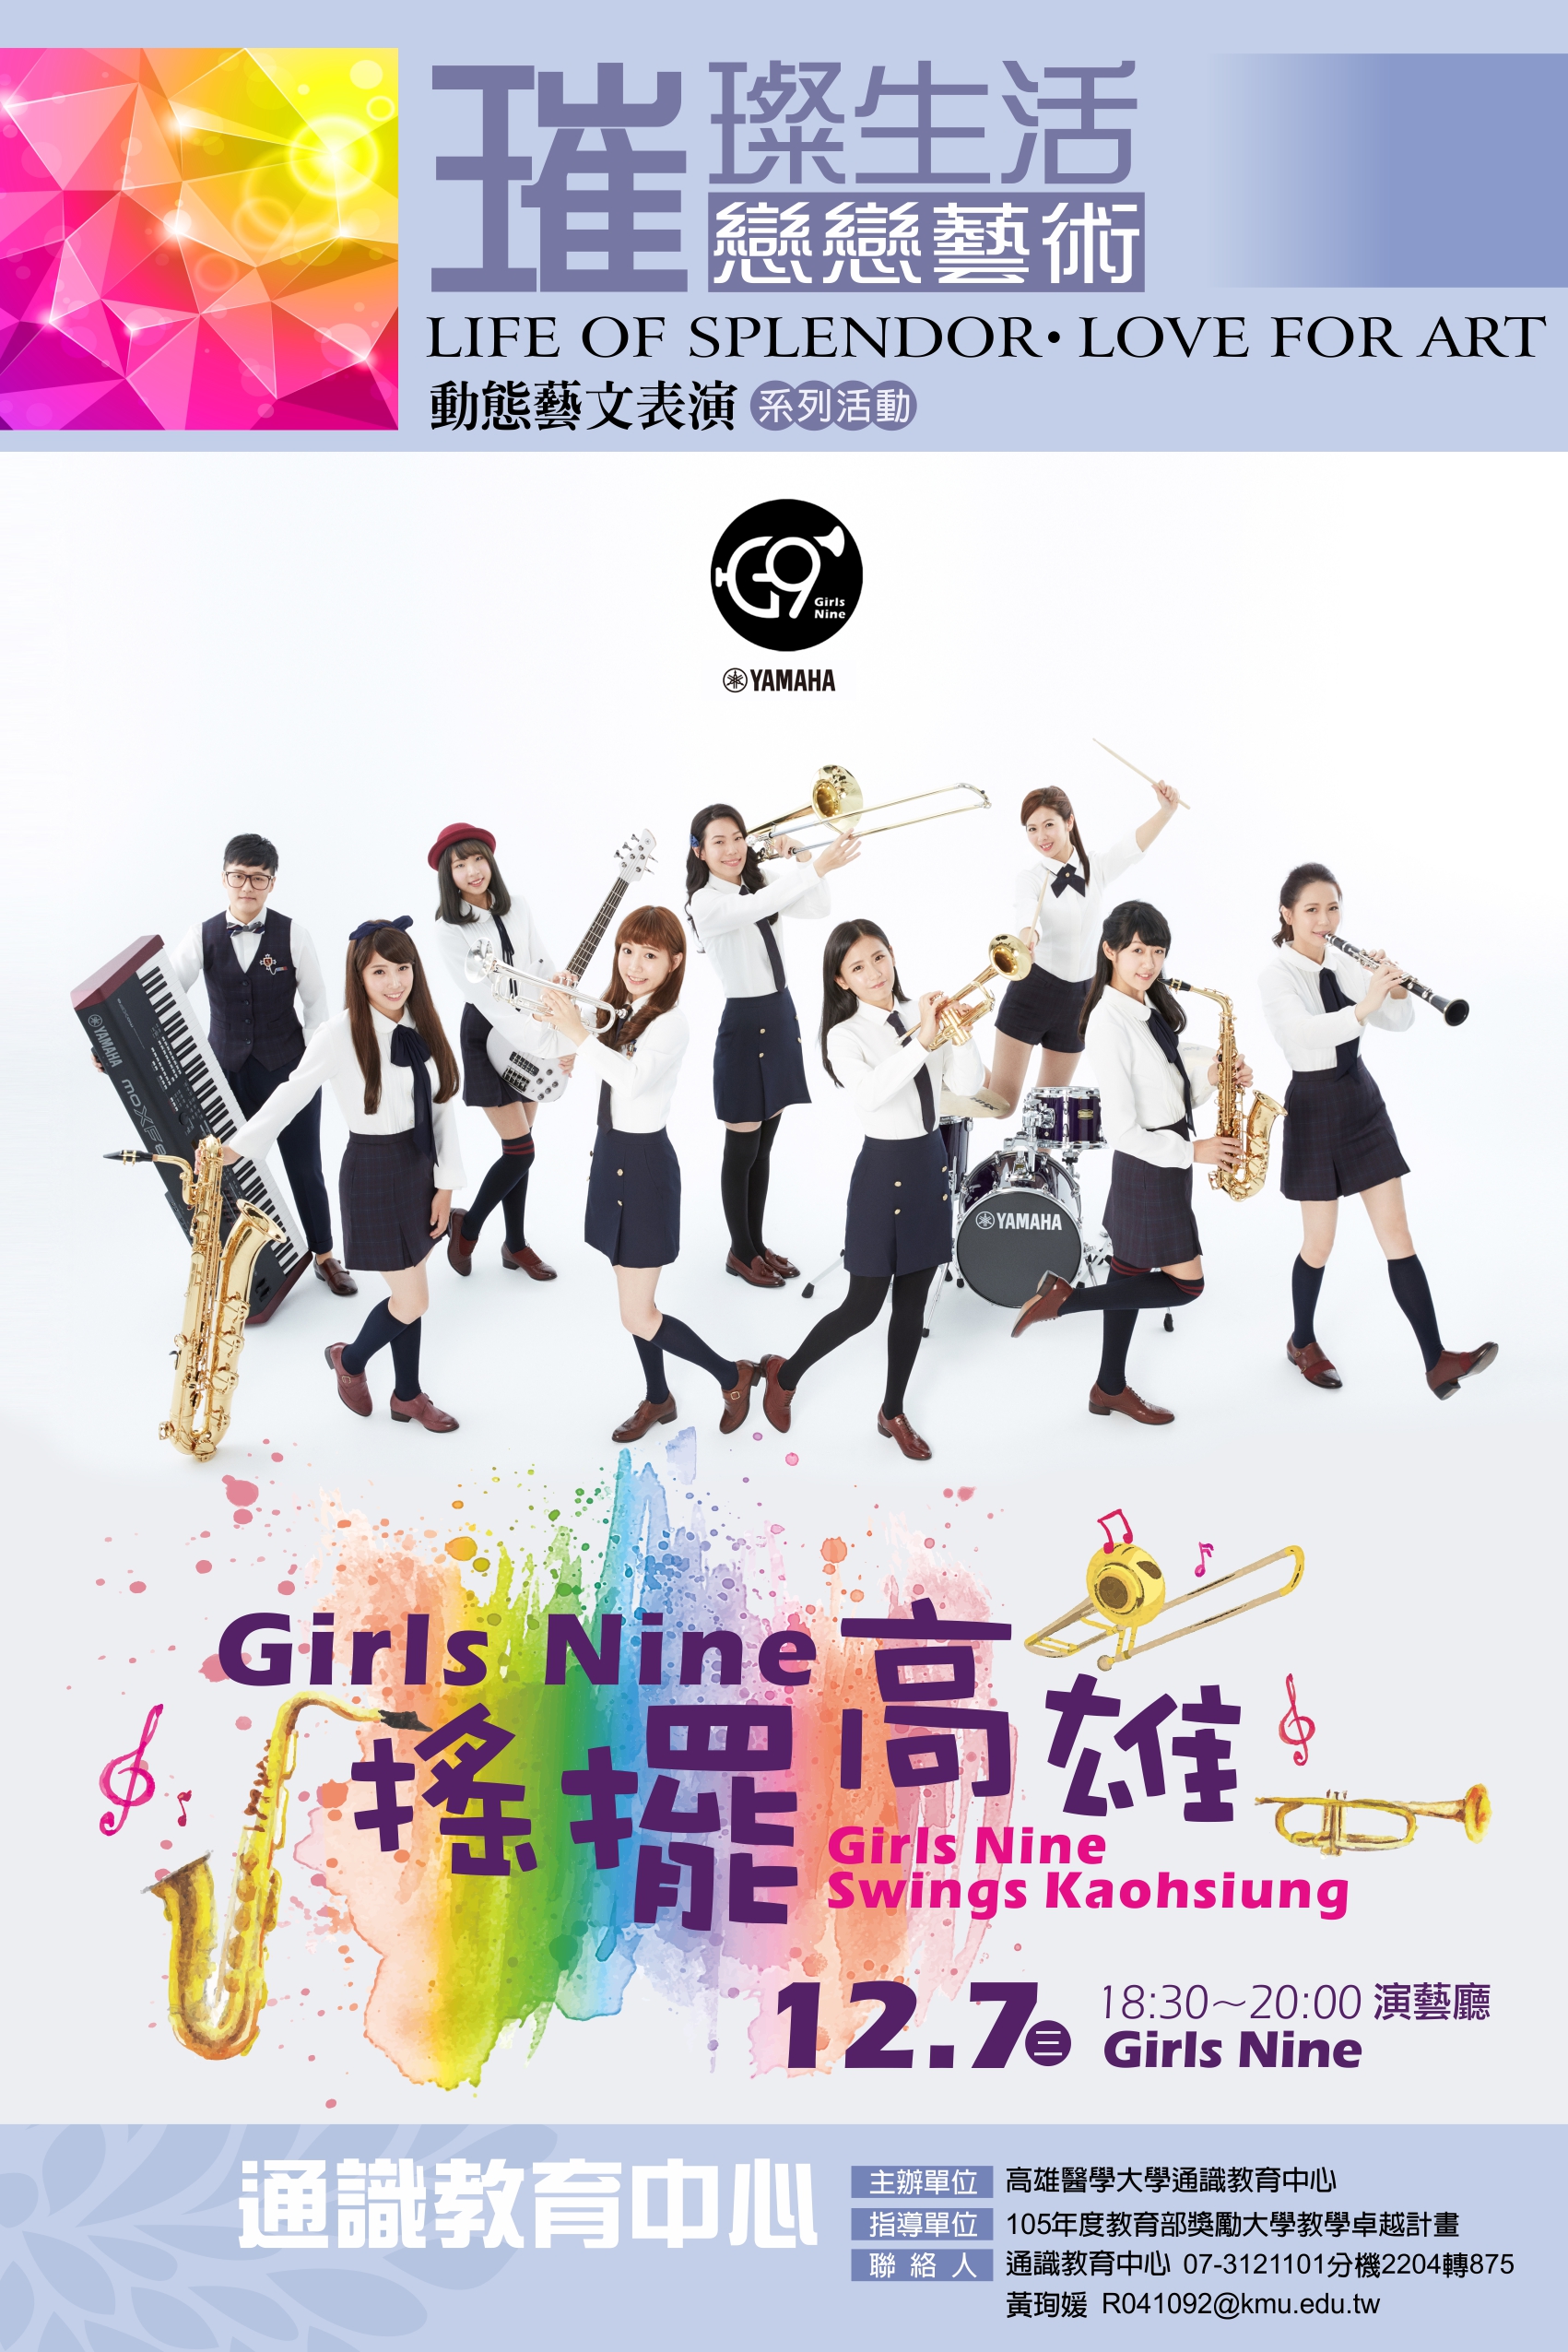 NEW105 11 30通識動態105.12.07 Girls Nine